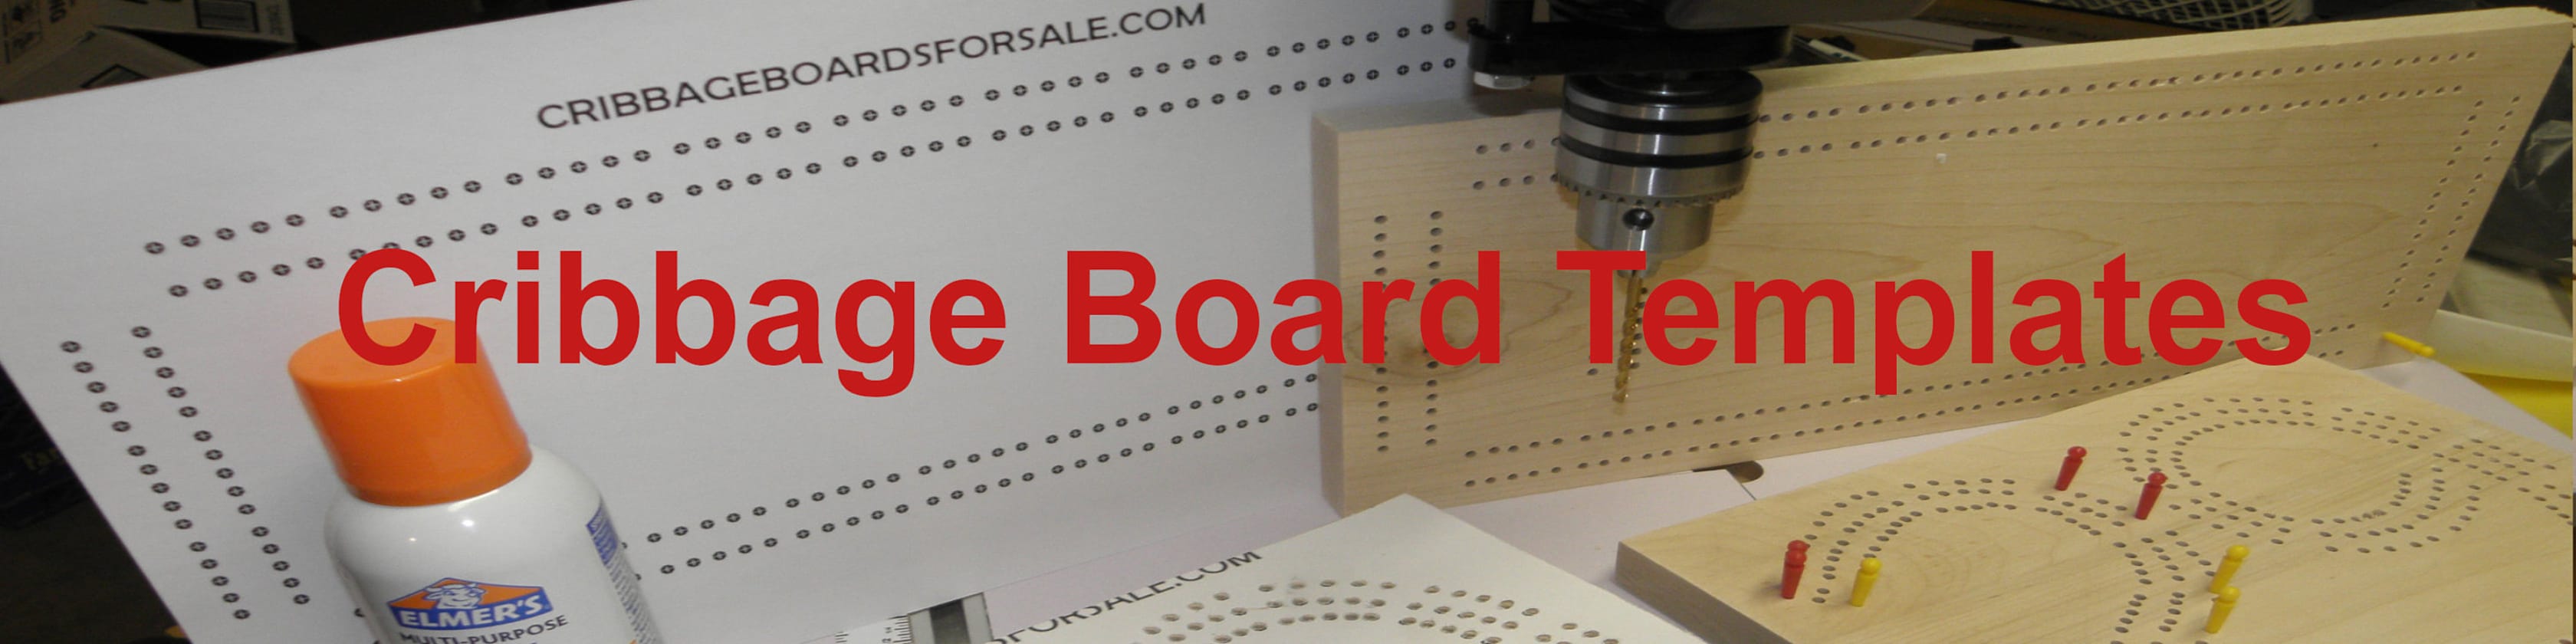 cribbagetemplatesfs-printable-cribbage-board-templates-etsy